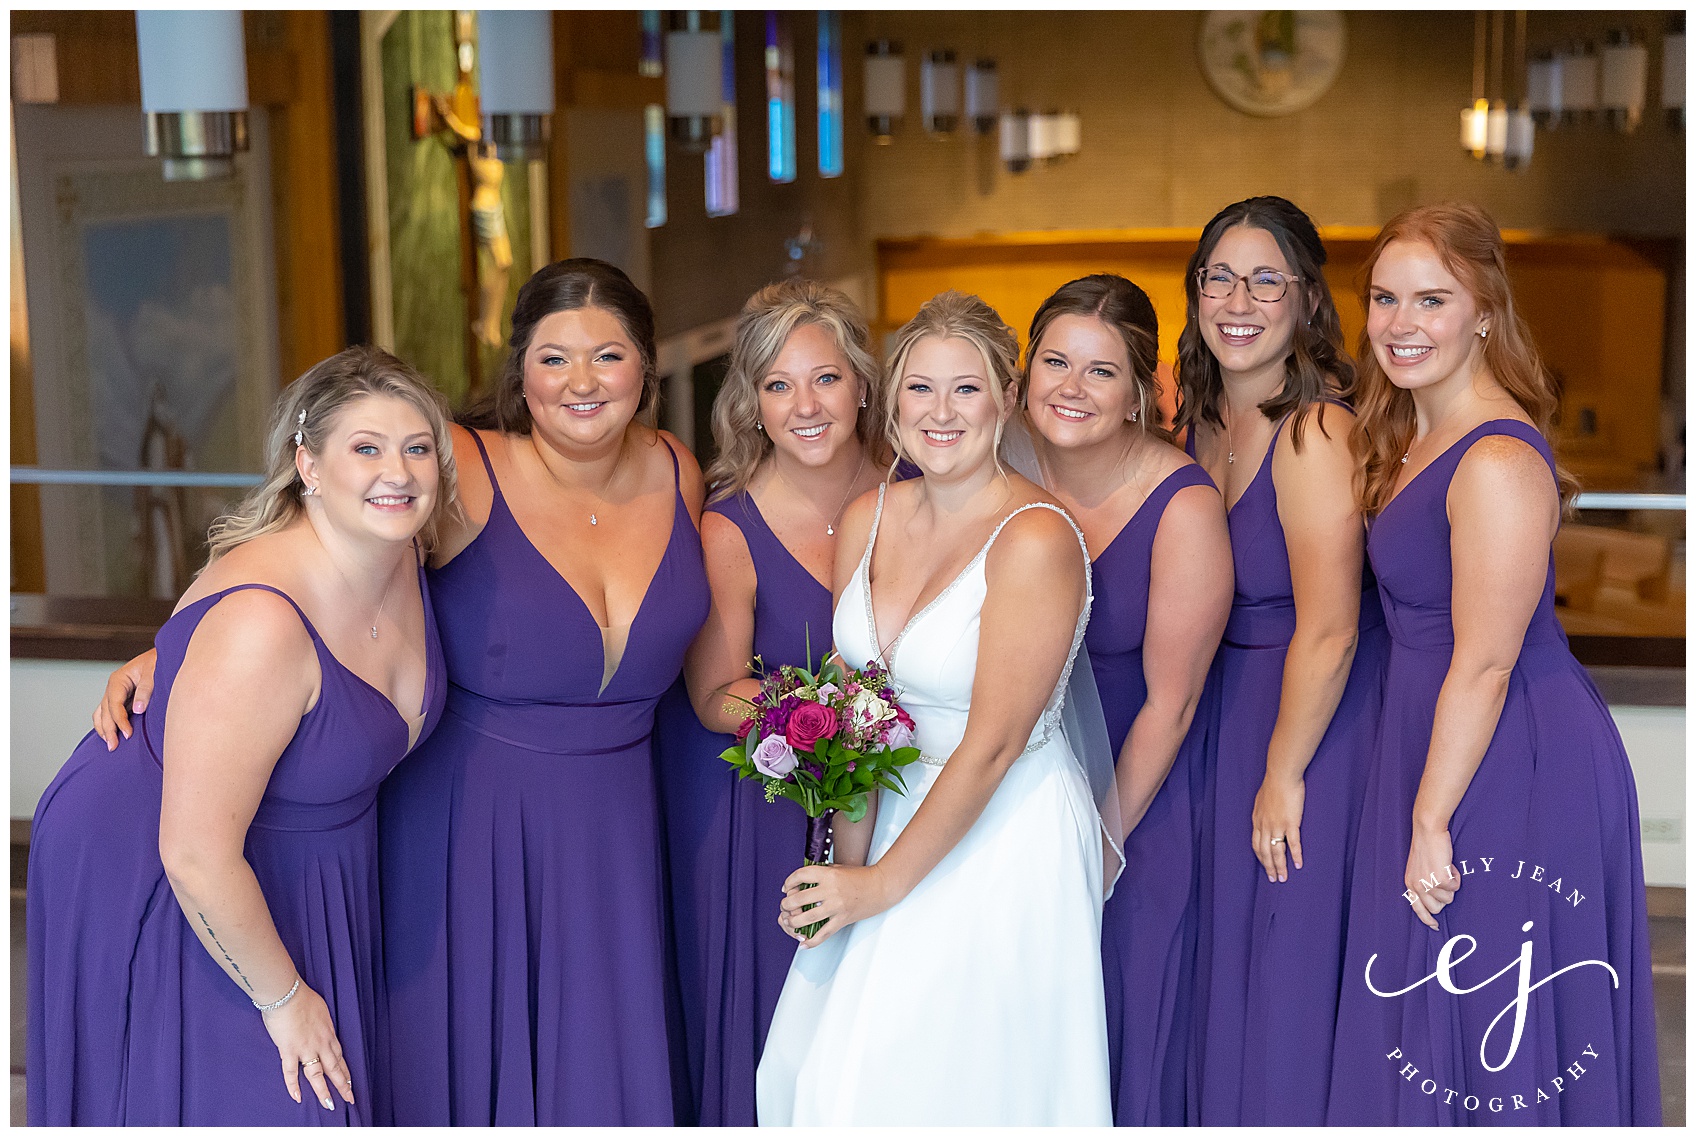 bride and bridesmaids at church smiling wearing purple